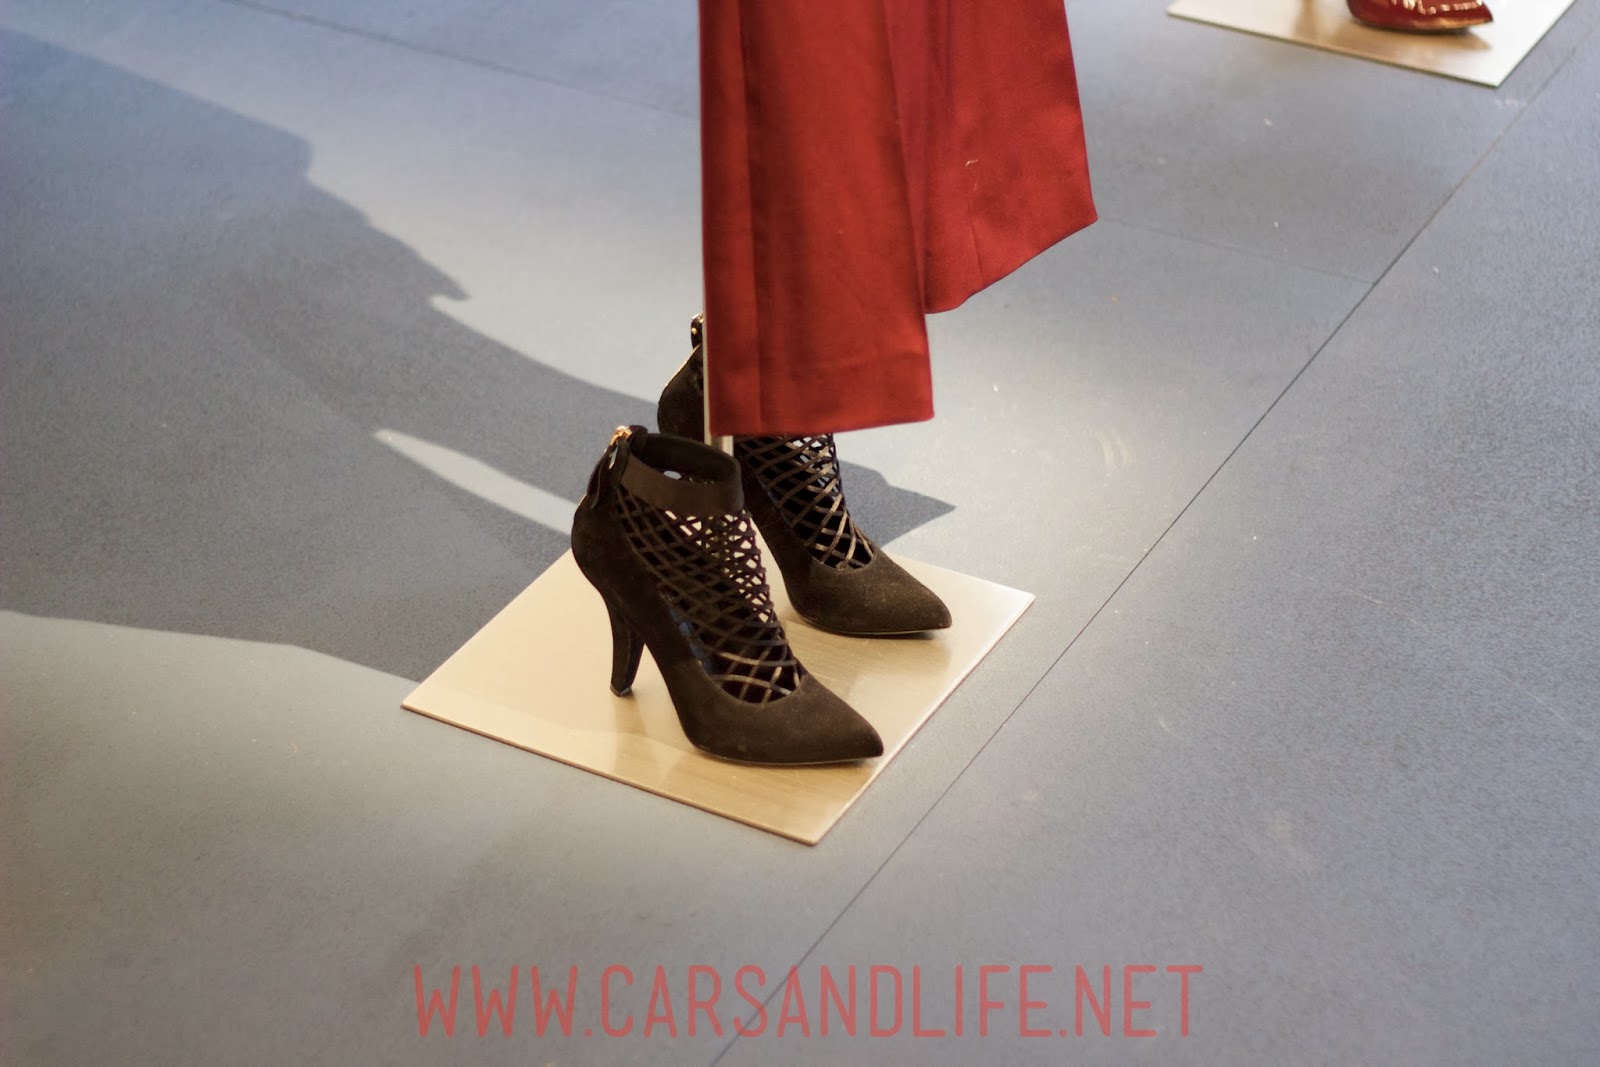 Cars & Life | Cars Fashion Lifestyle Blog